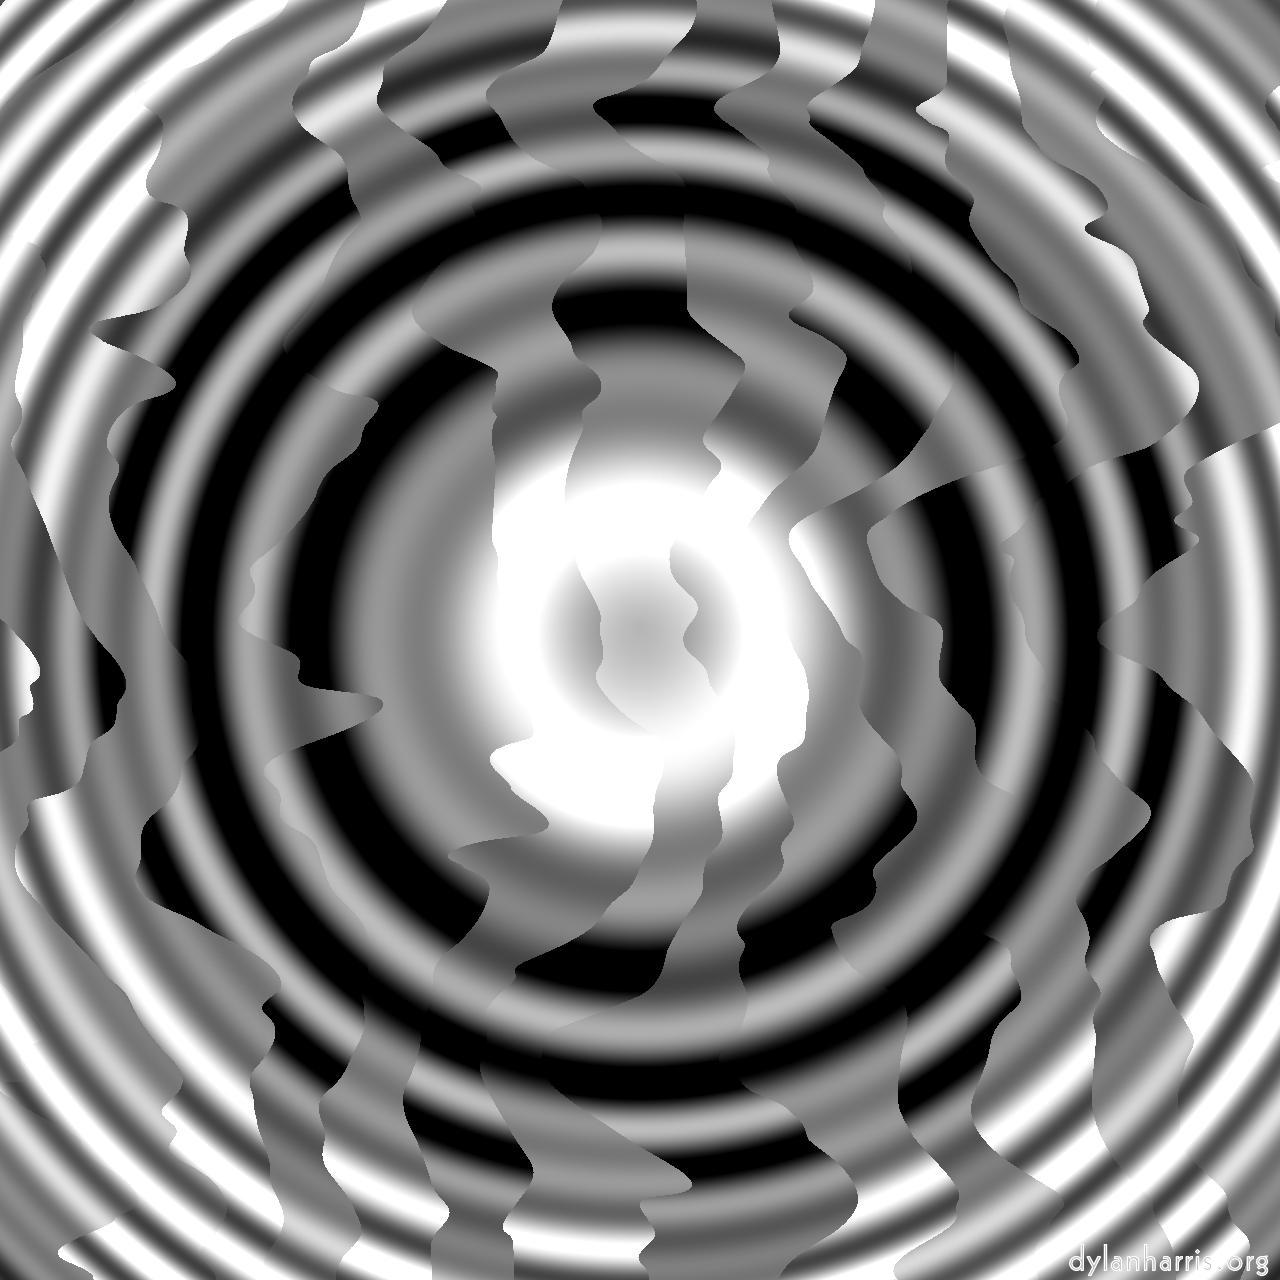 image: pen modulation 2 :: waves intersecting 2 circles